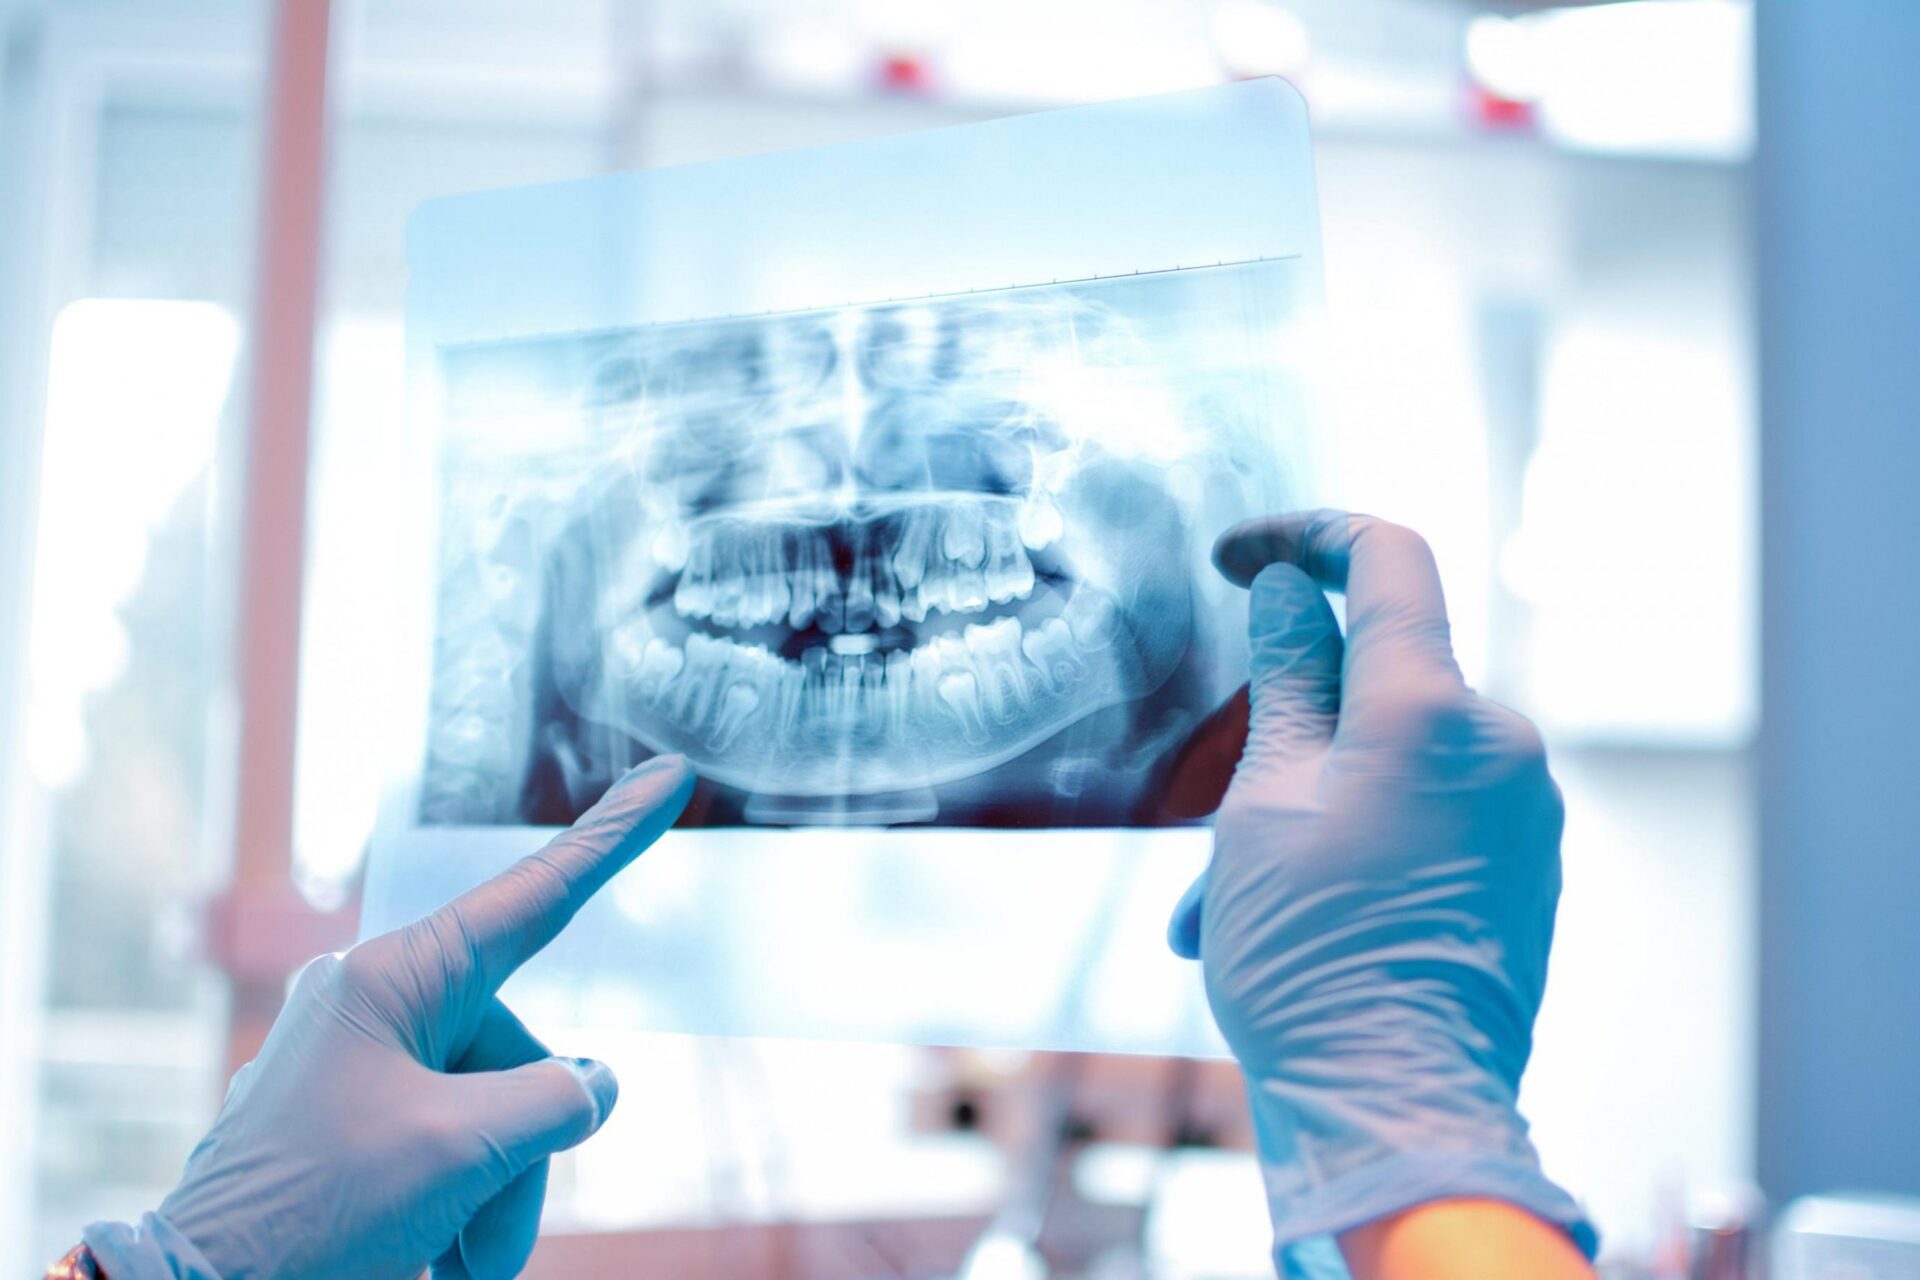 Dental X-Rays Market